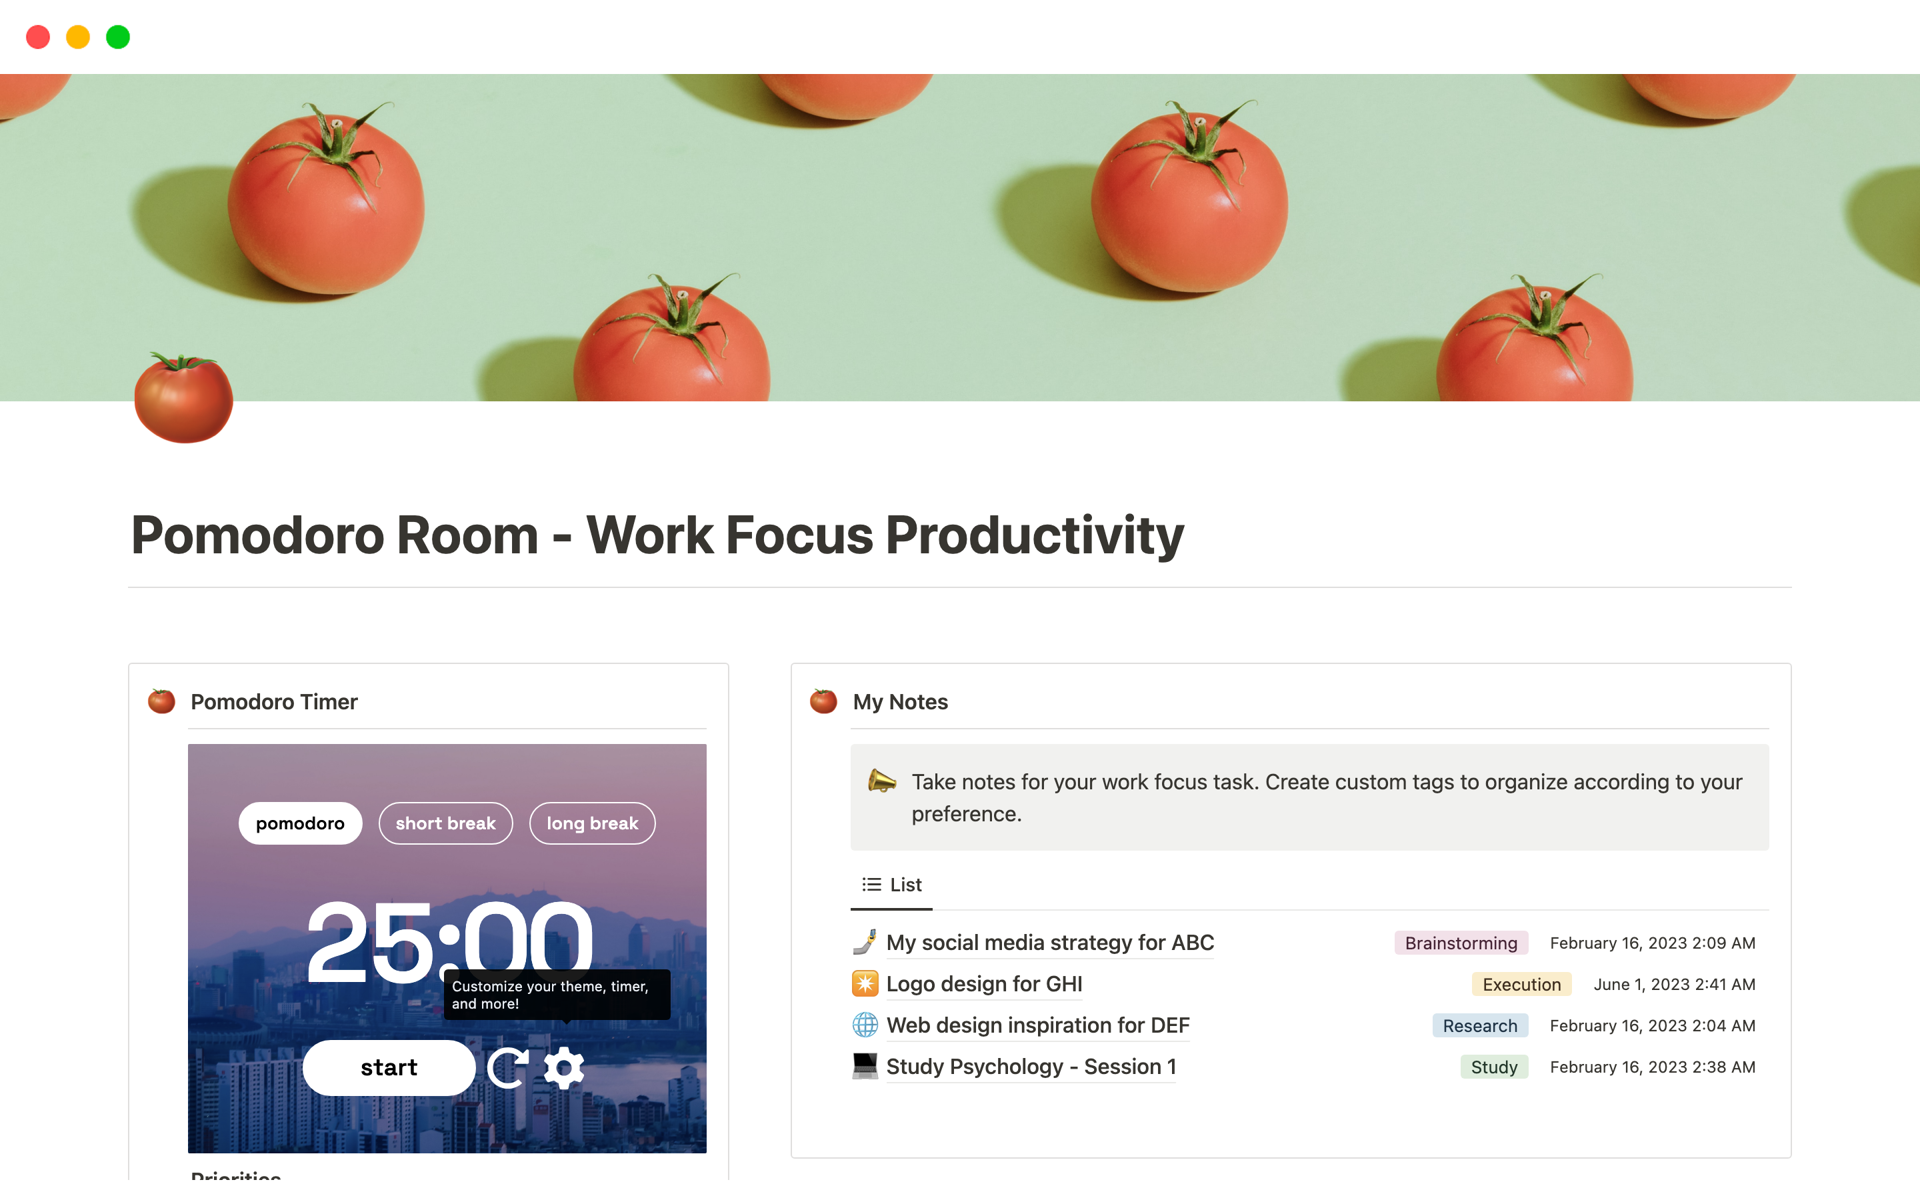 En forhåndsvisning av mal for Pomodoro Room - Work Focus Productivity